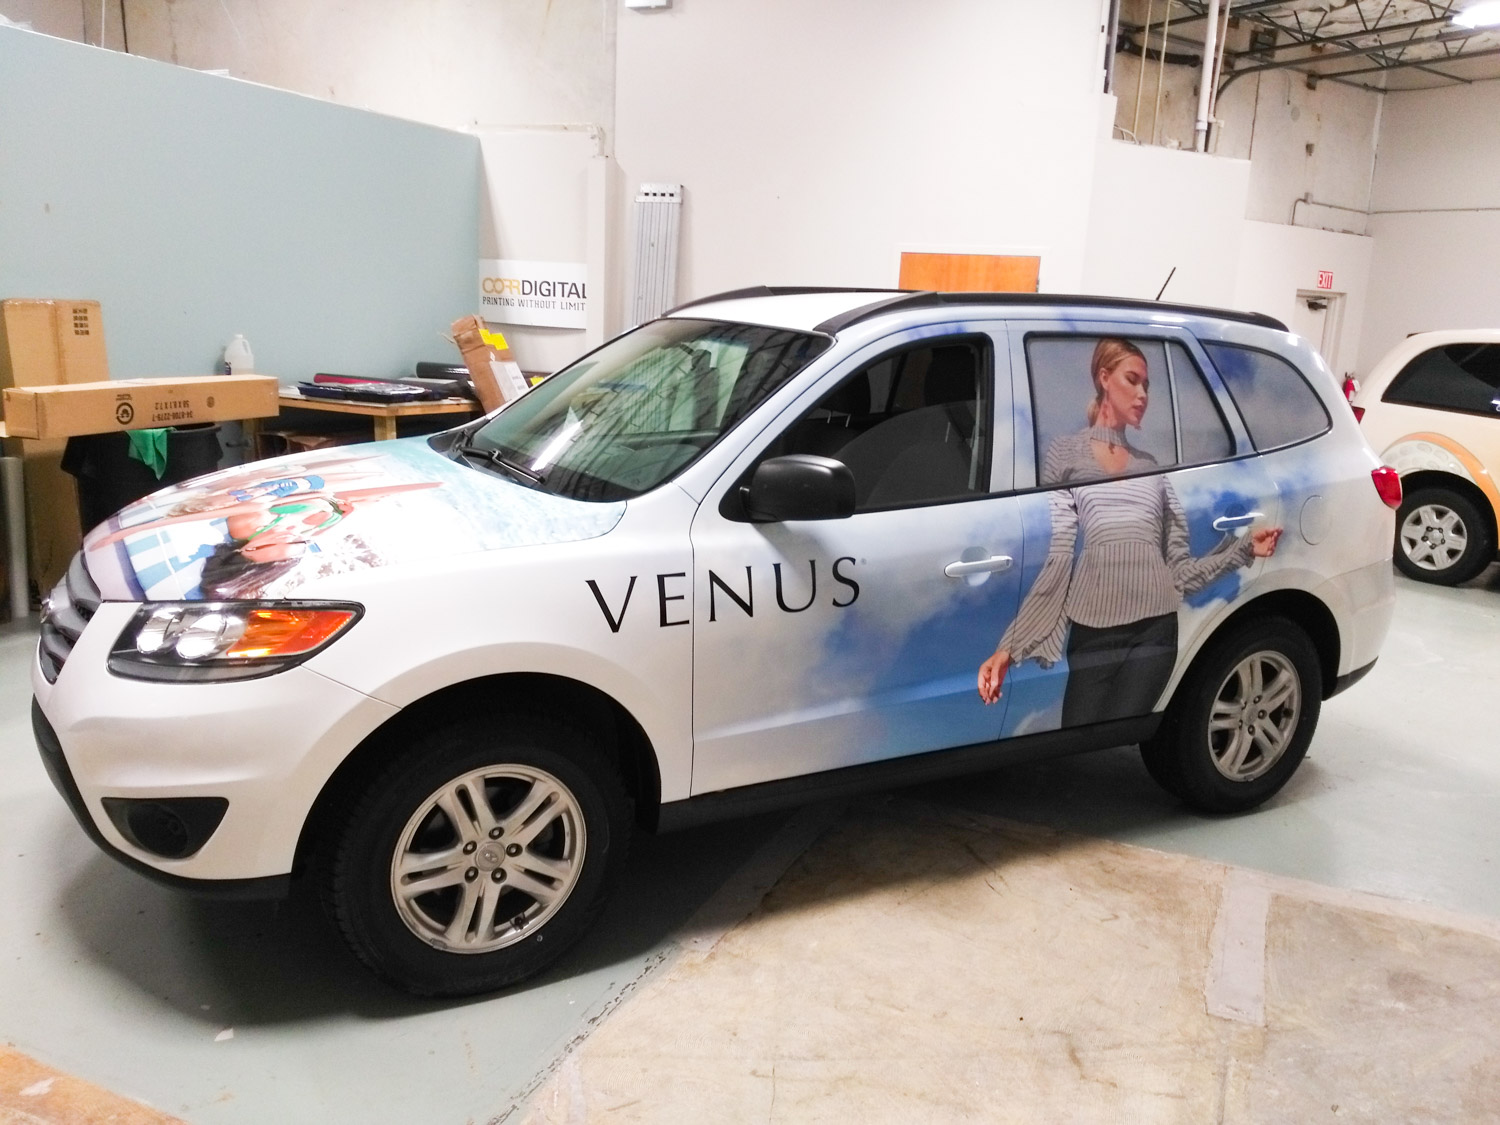 Venus Vehicle Wrap